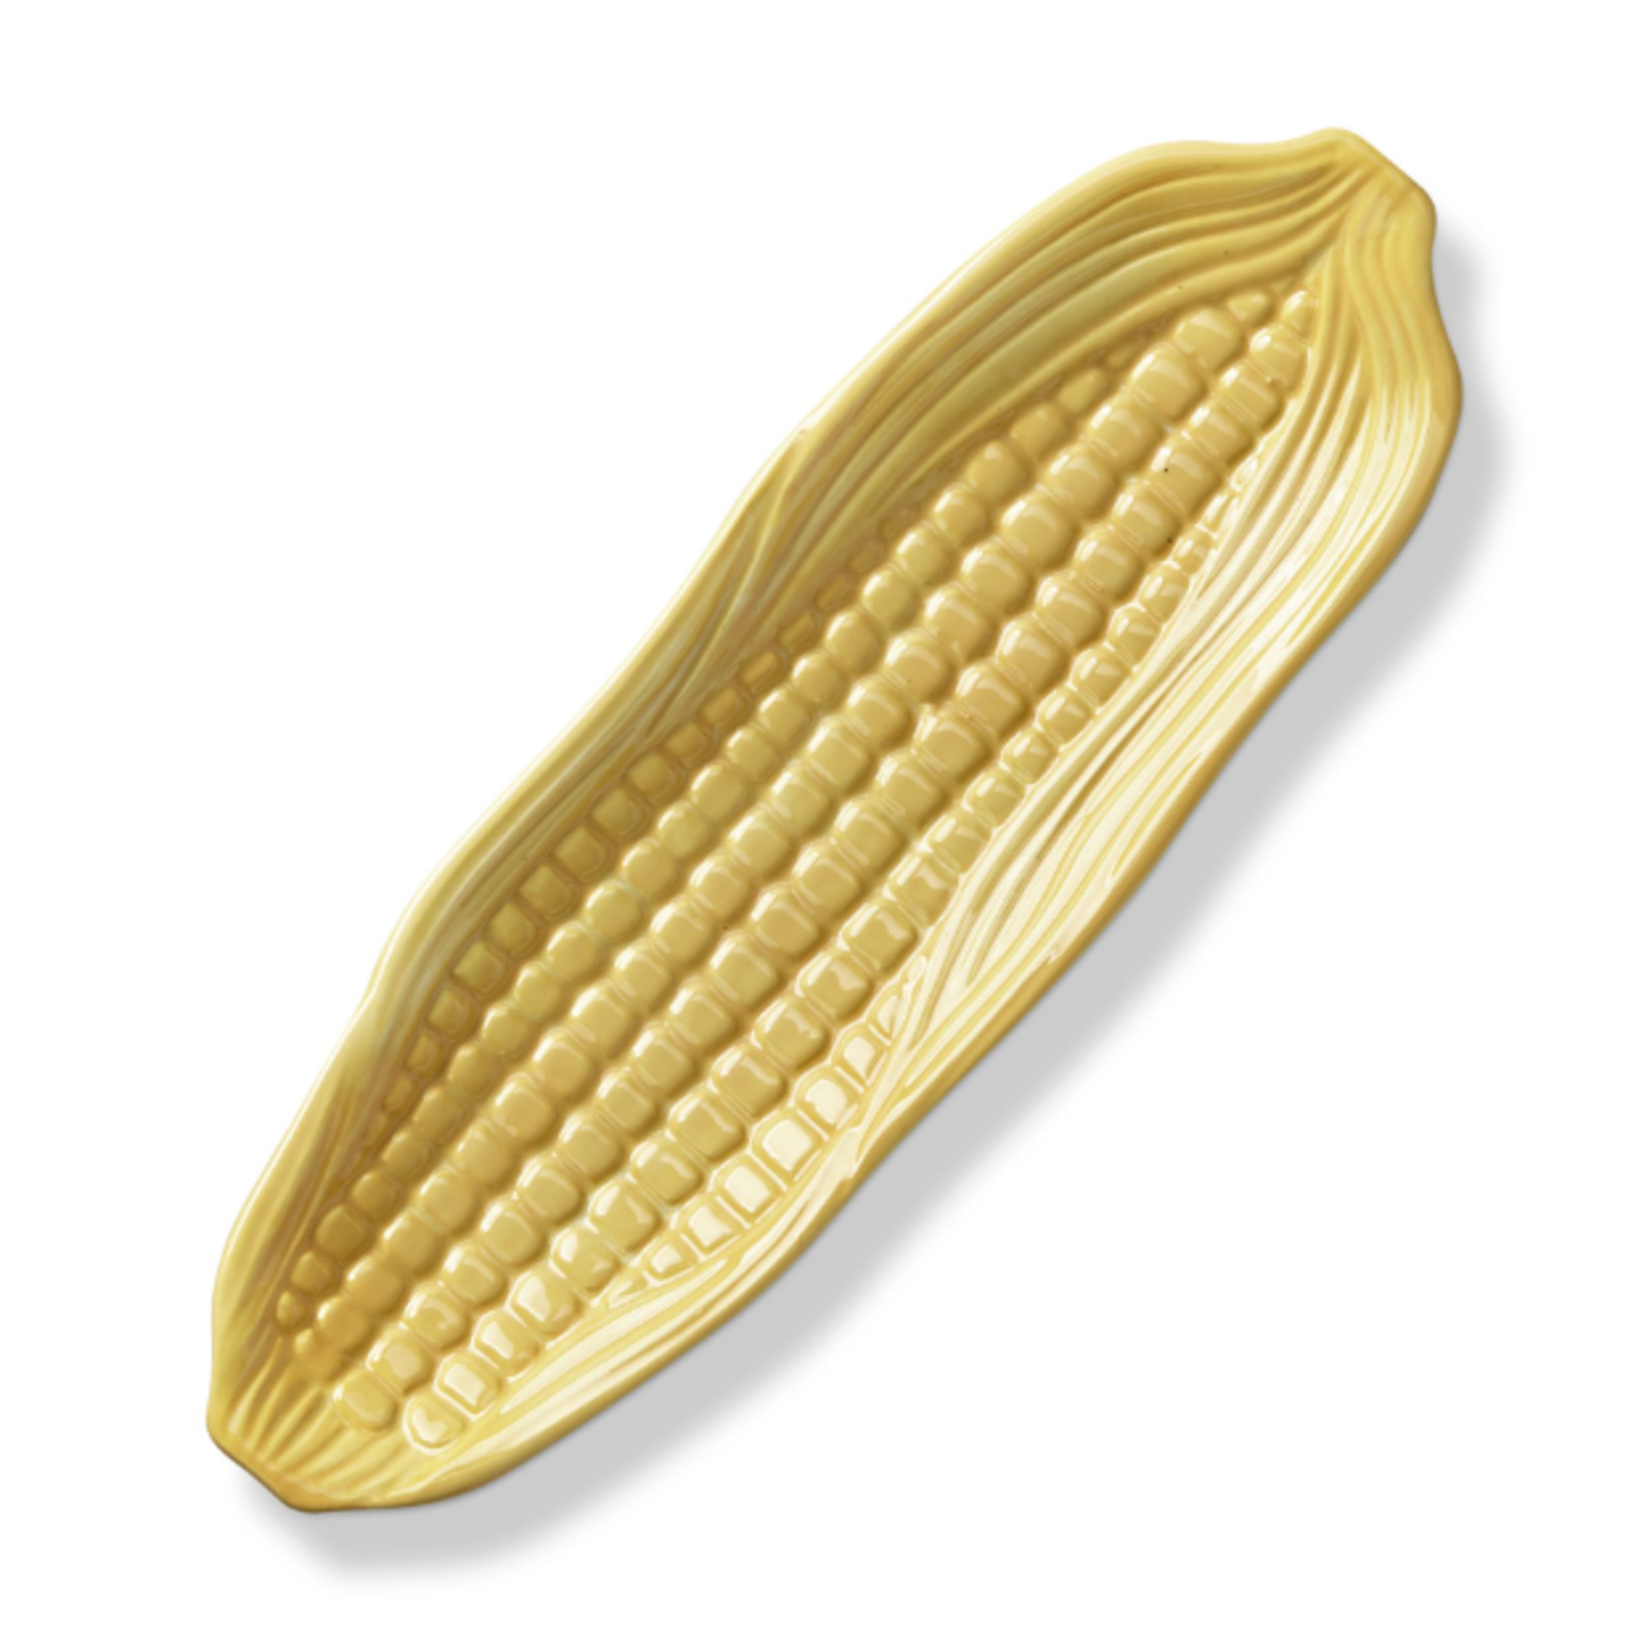 Tag Corn Dish - Yellow